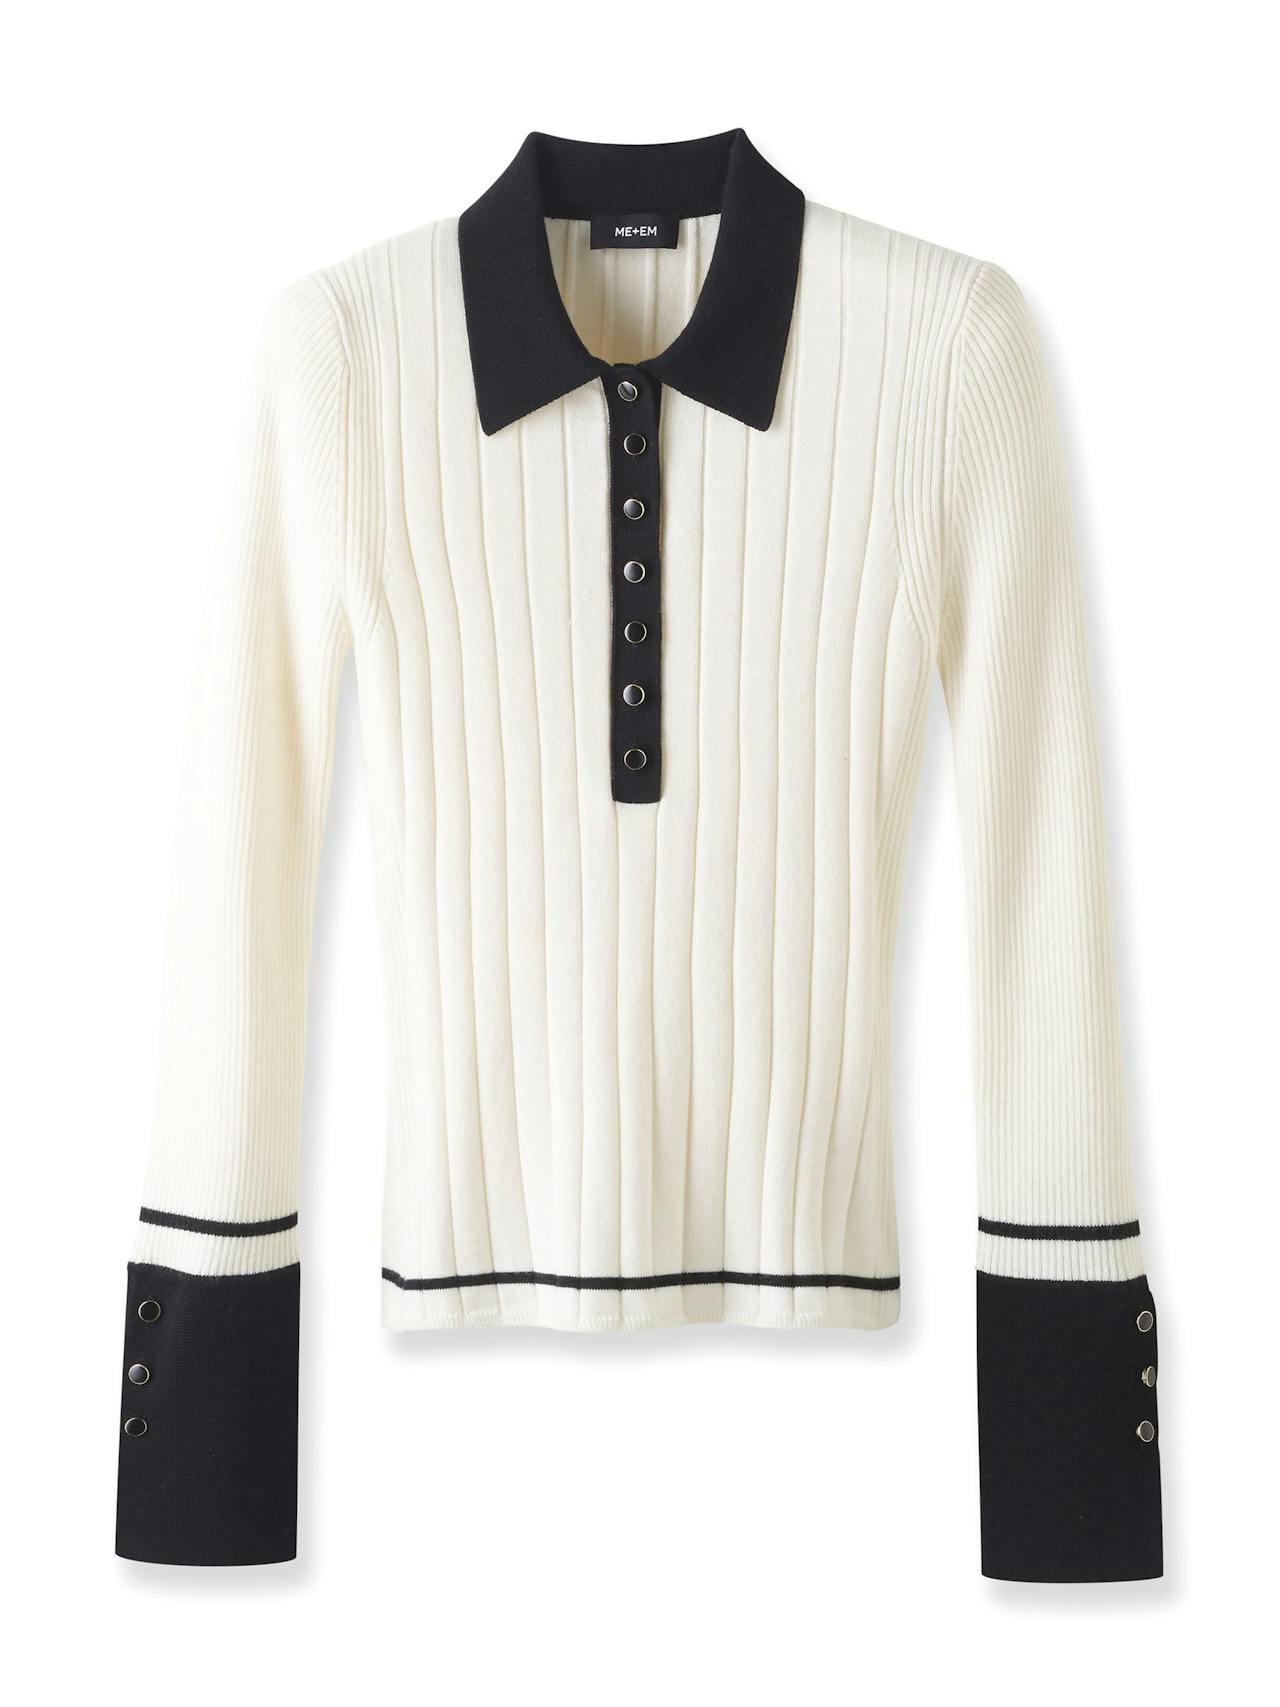 Merino silk knit shirt in Soft White/Black